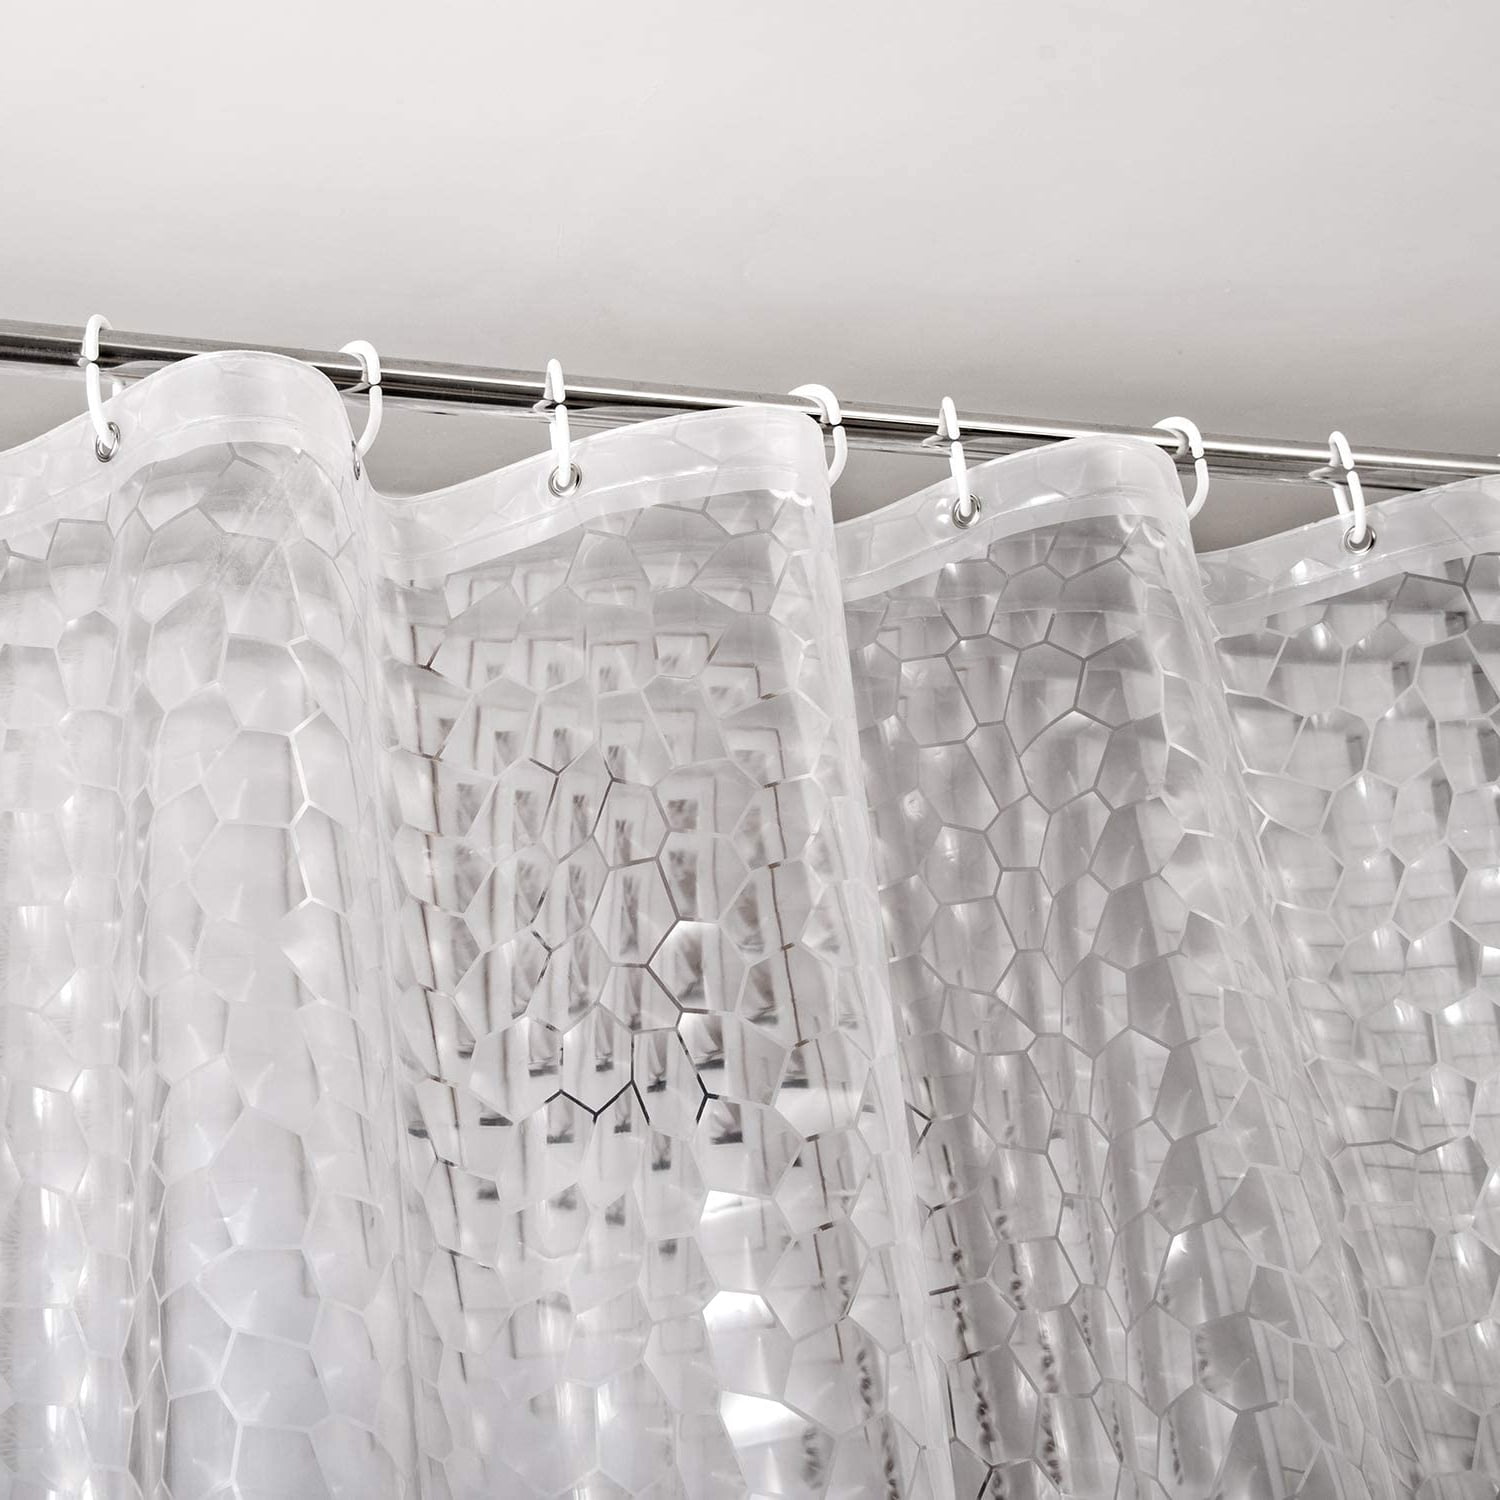 PEVA and Tub No Odor Clear Shower 3-Gauge Inner Shower Curtain Liner for Bathroom mDesign Plastic Transparent Shower Curtain Liner Water-Resistant 3 Pack